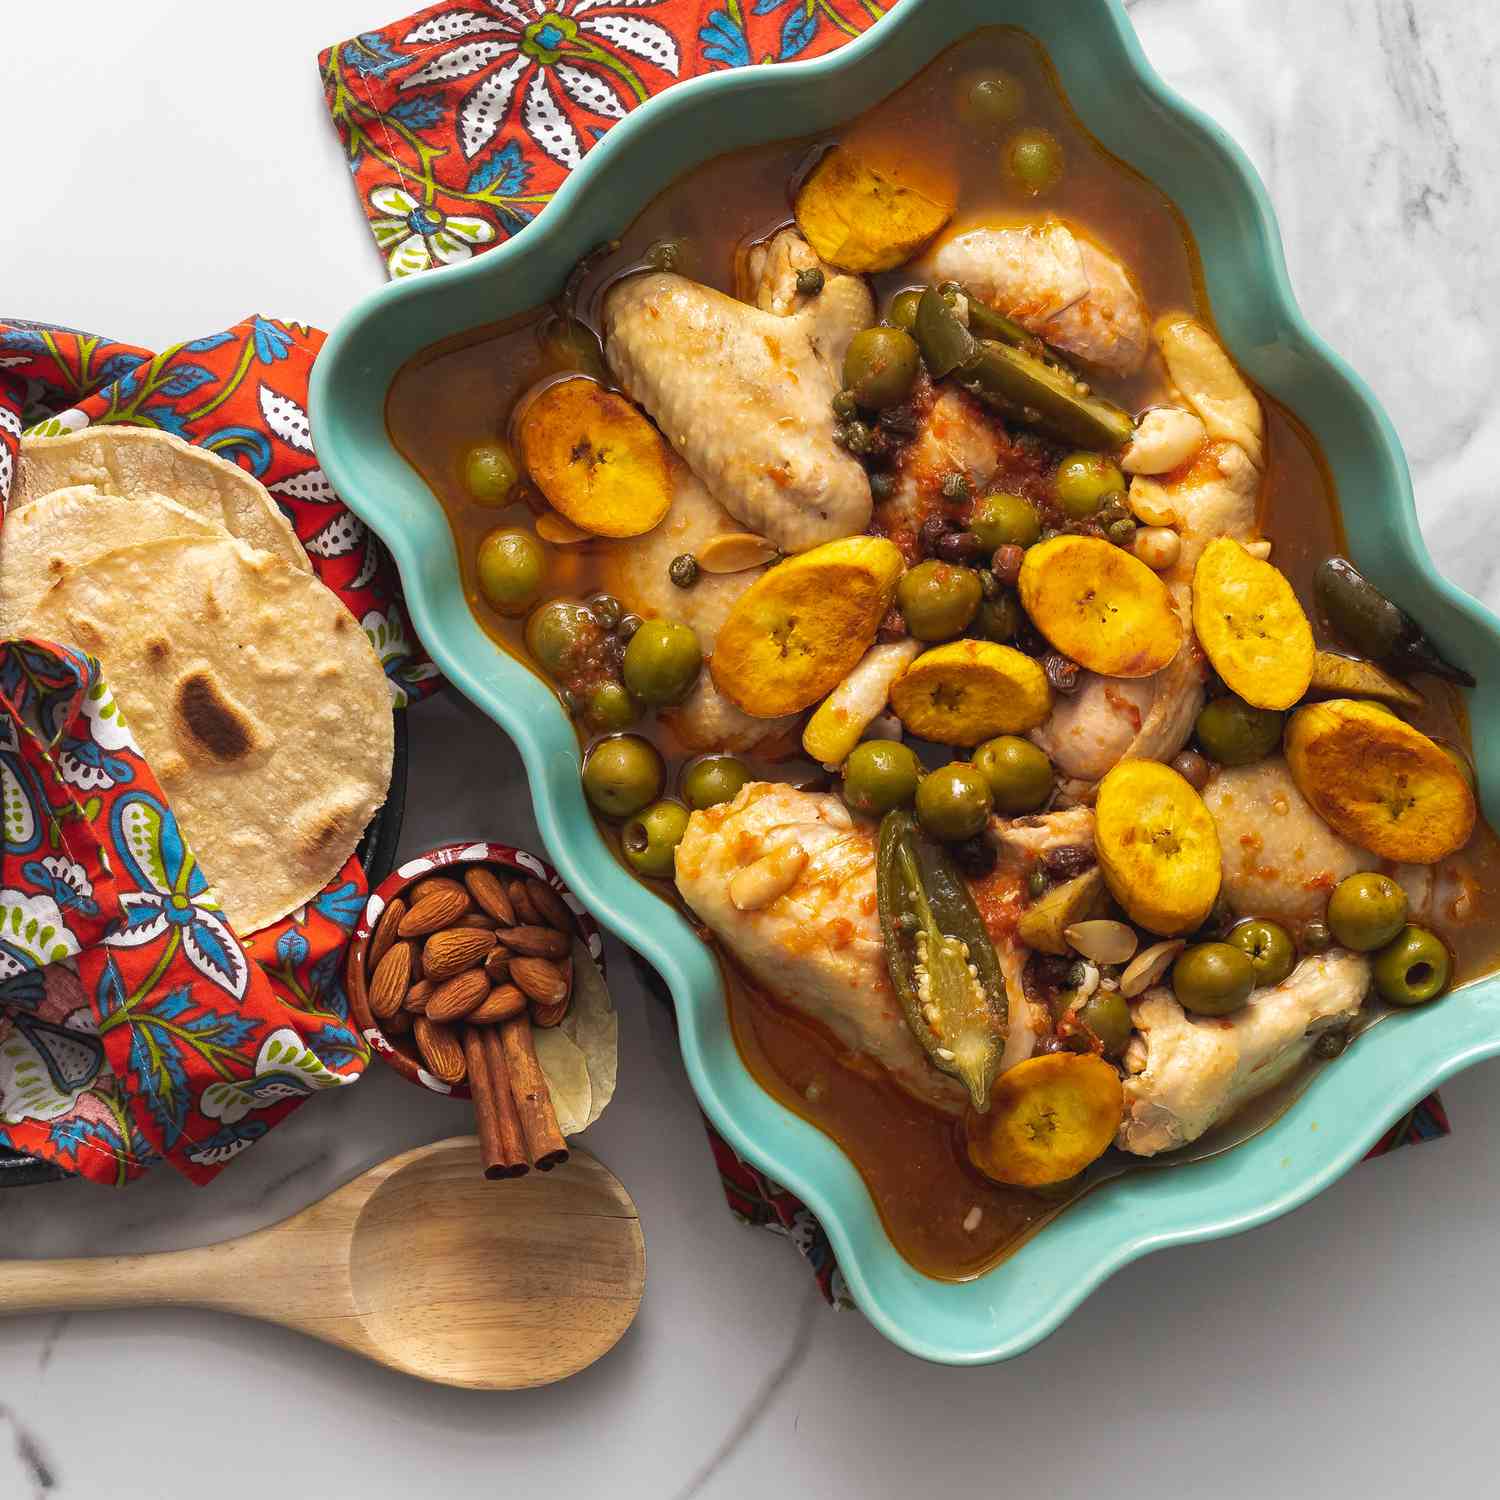 7 New Recipes to Celebrate Hispanic Heritage